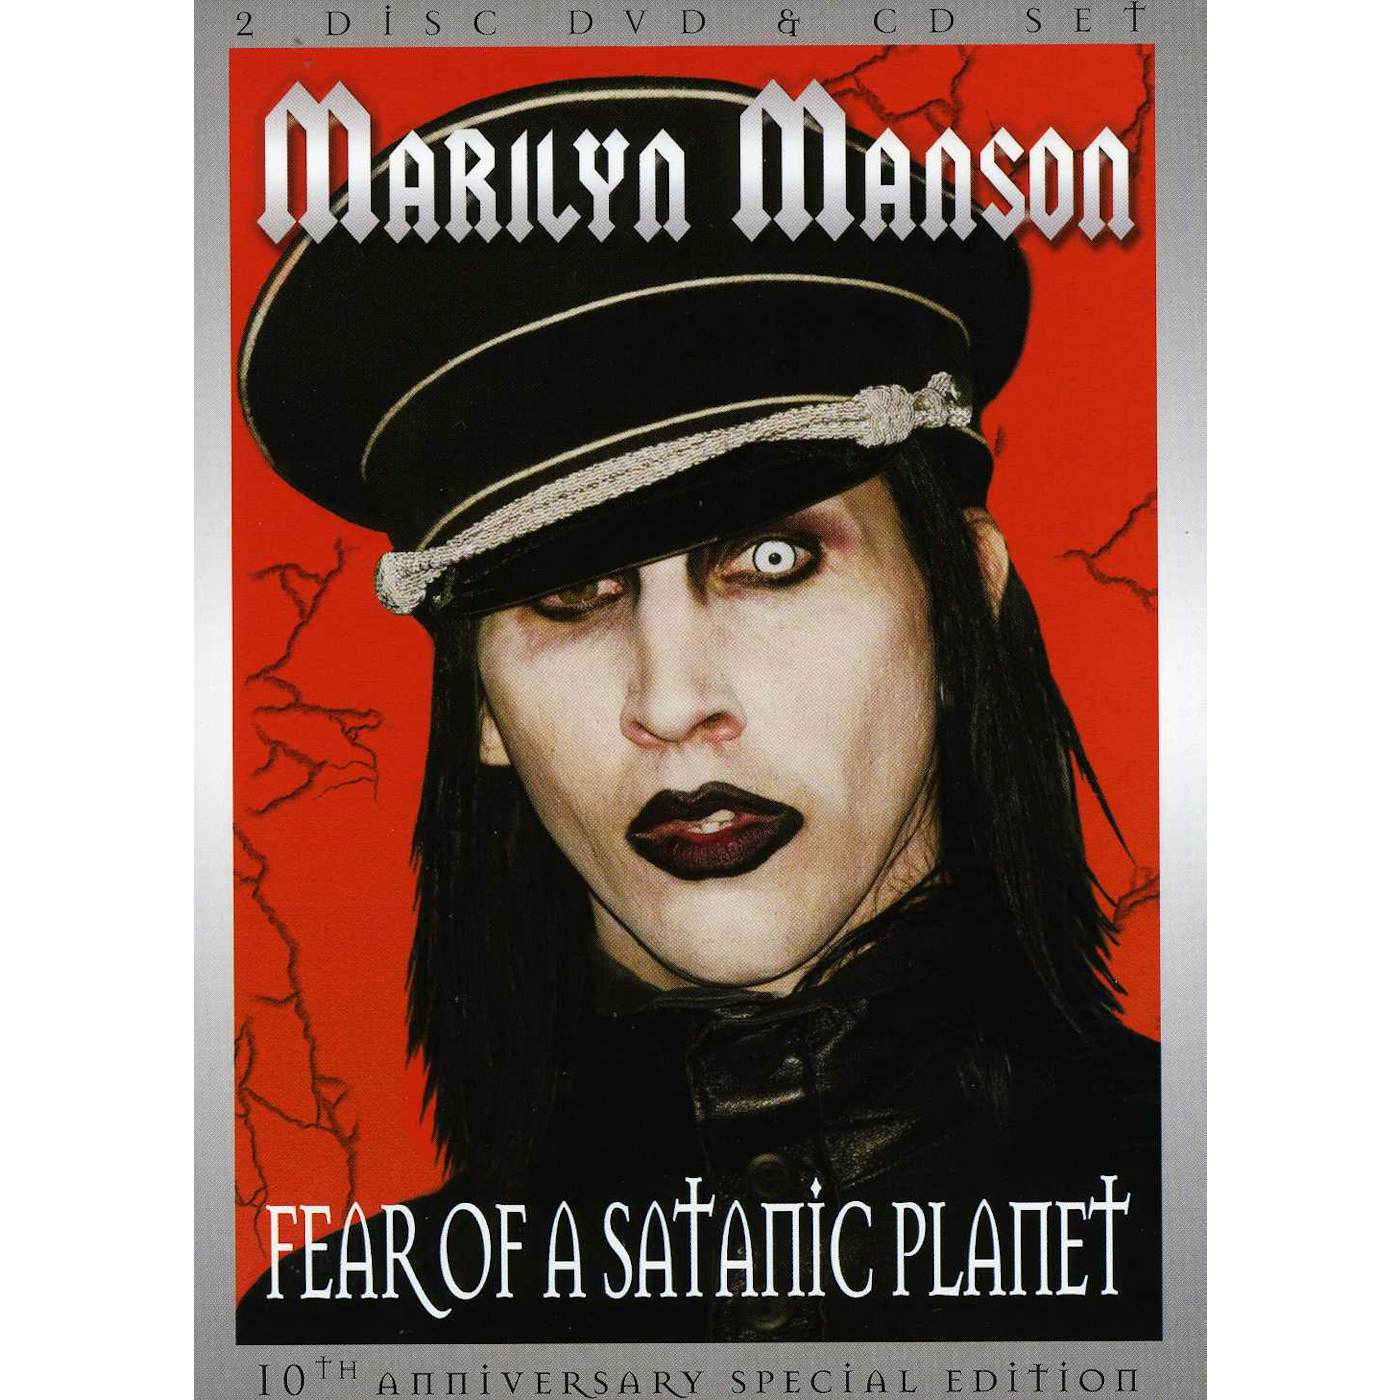 Marilyn Manson FEAR OF A SATANIC PLANET DVD